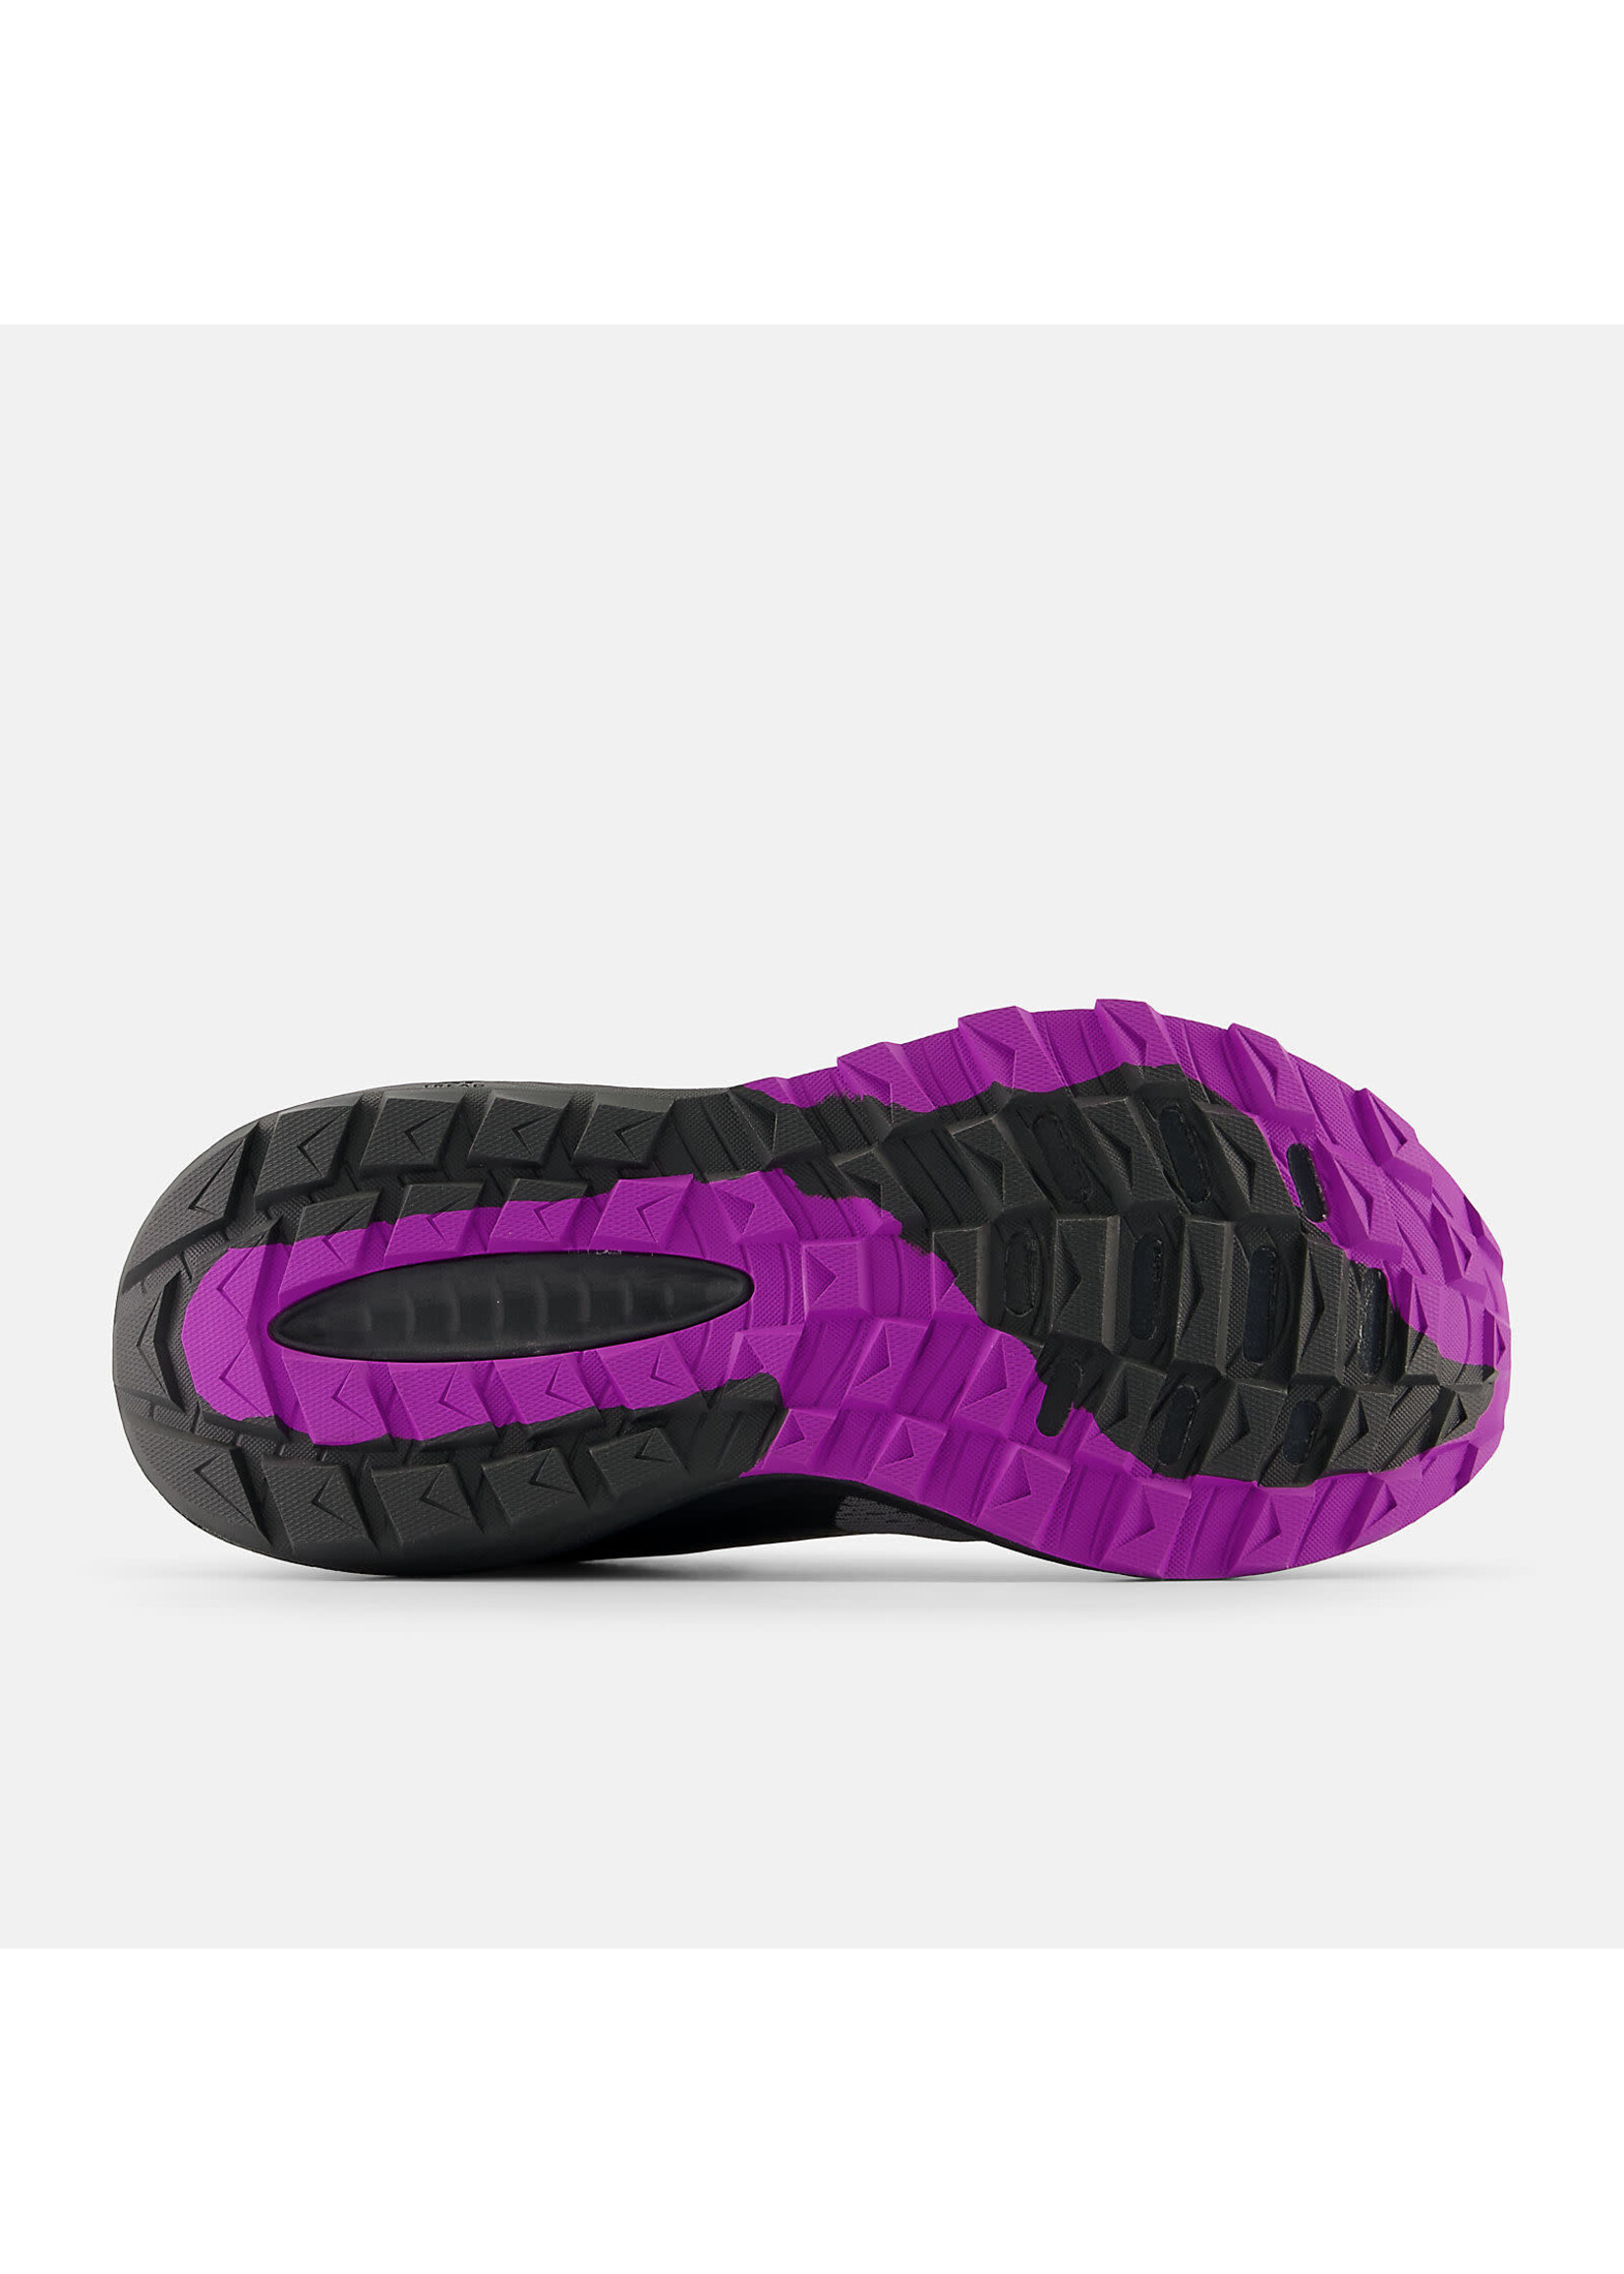 New Balance New Balance Nitrel V5 Ladies Trail Running Shoes, Grey/Purple